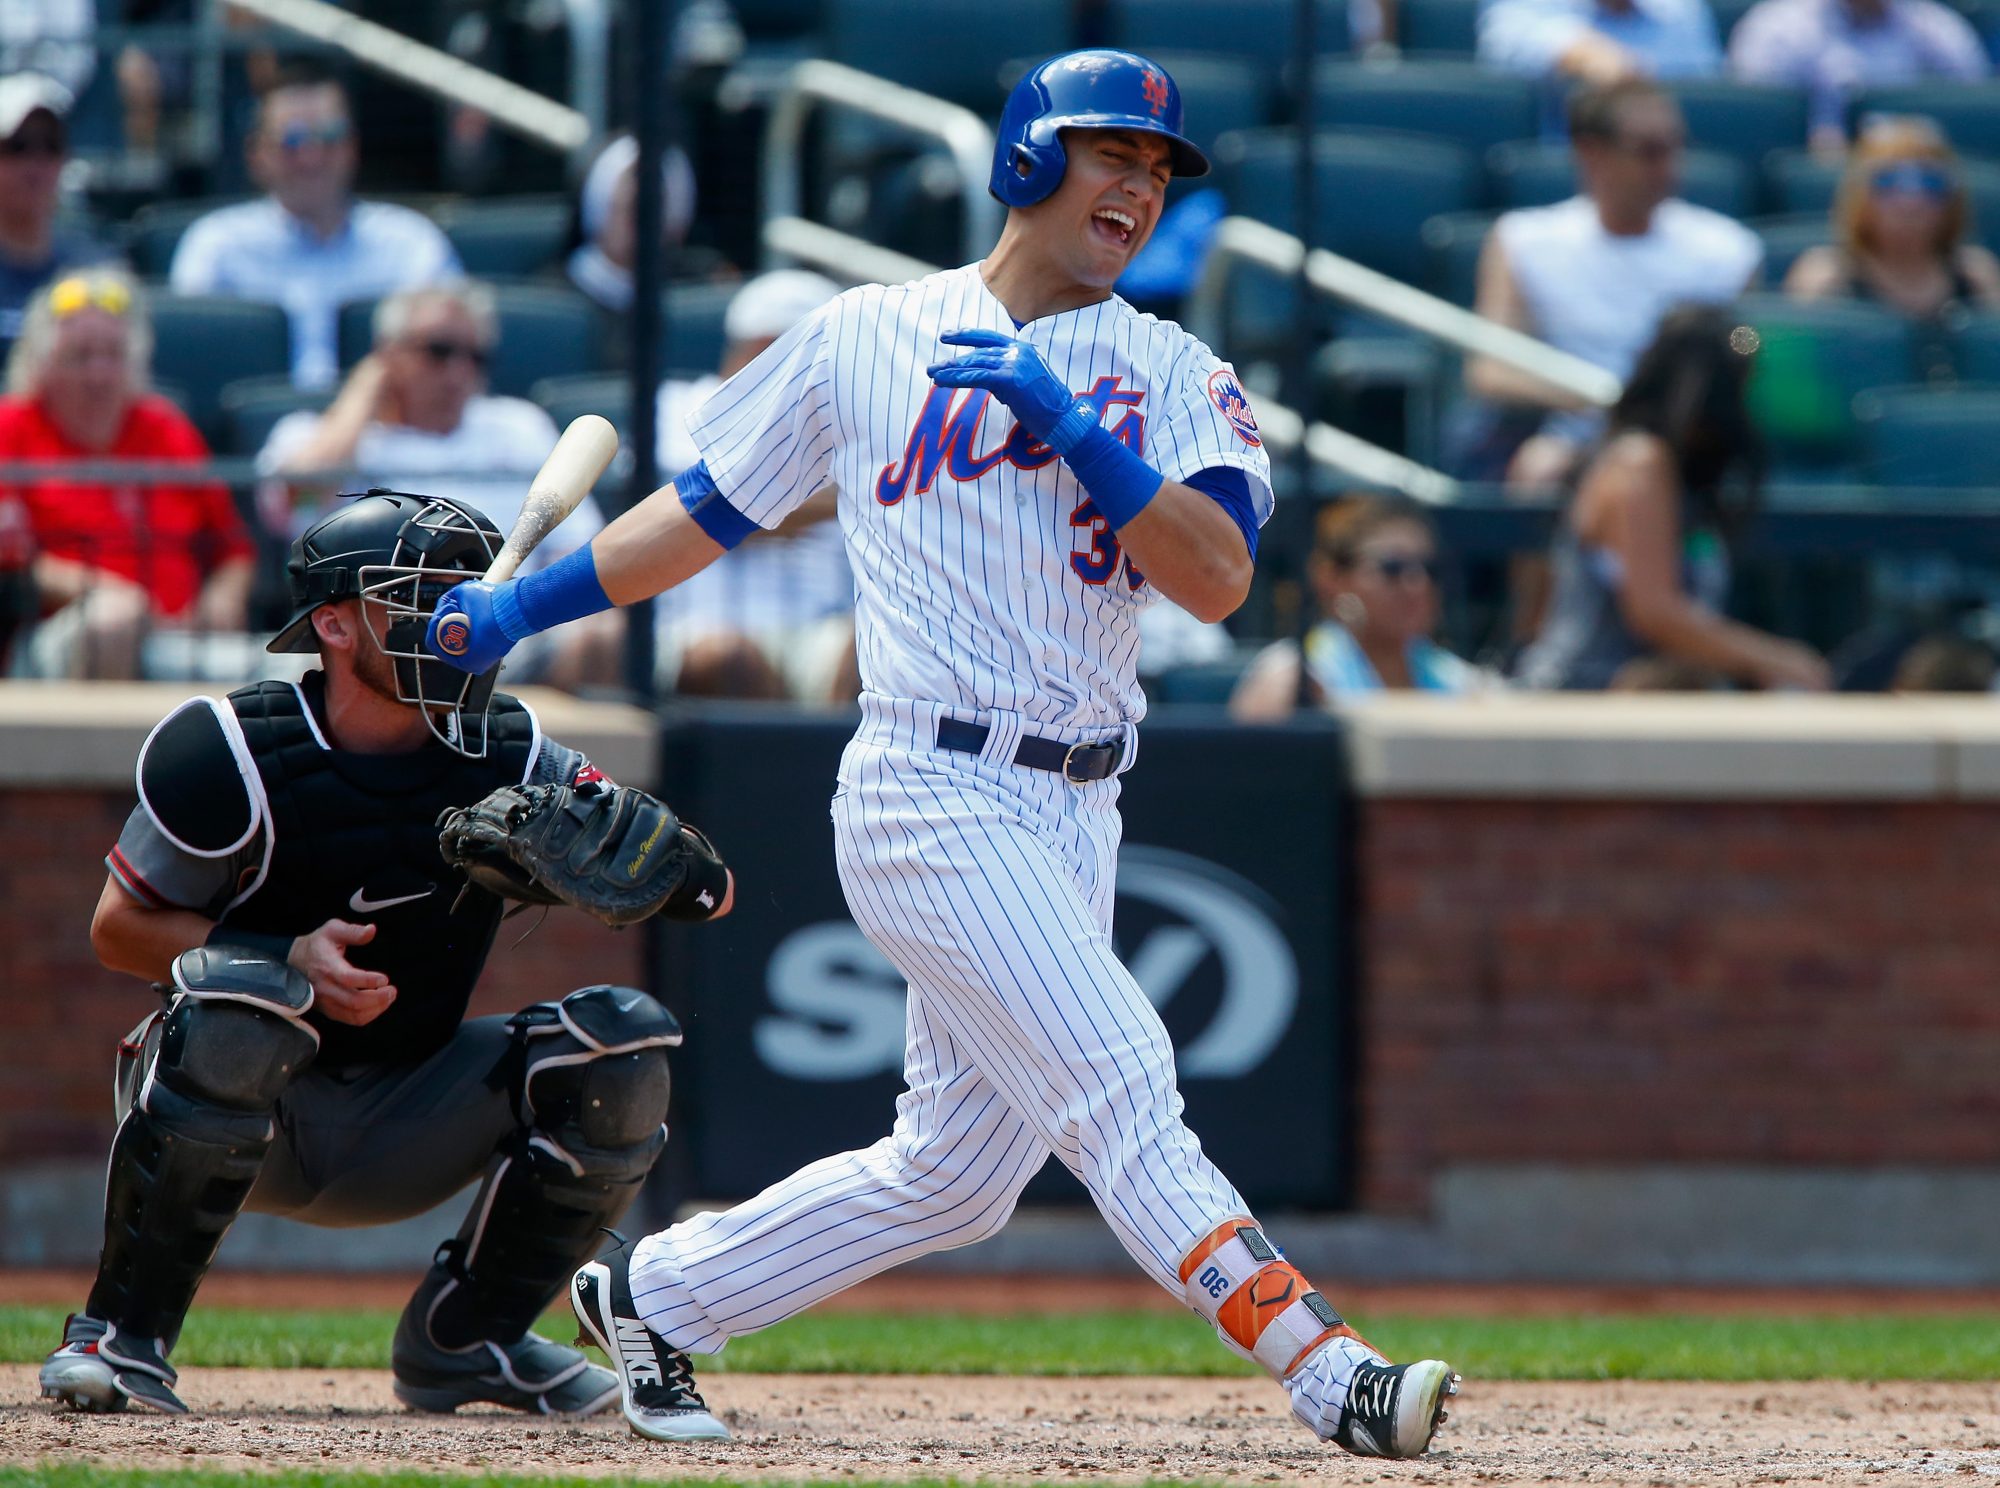 New York Mets: David Wright, T.J. Rivera Among Players Set For Surgery 